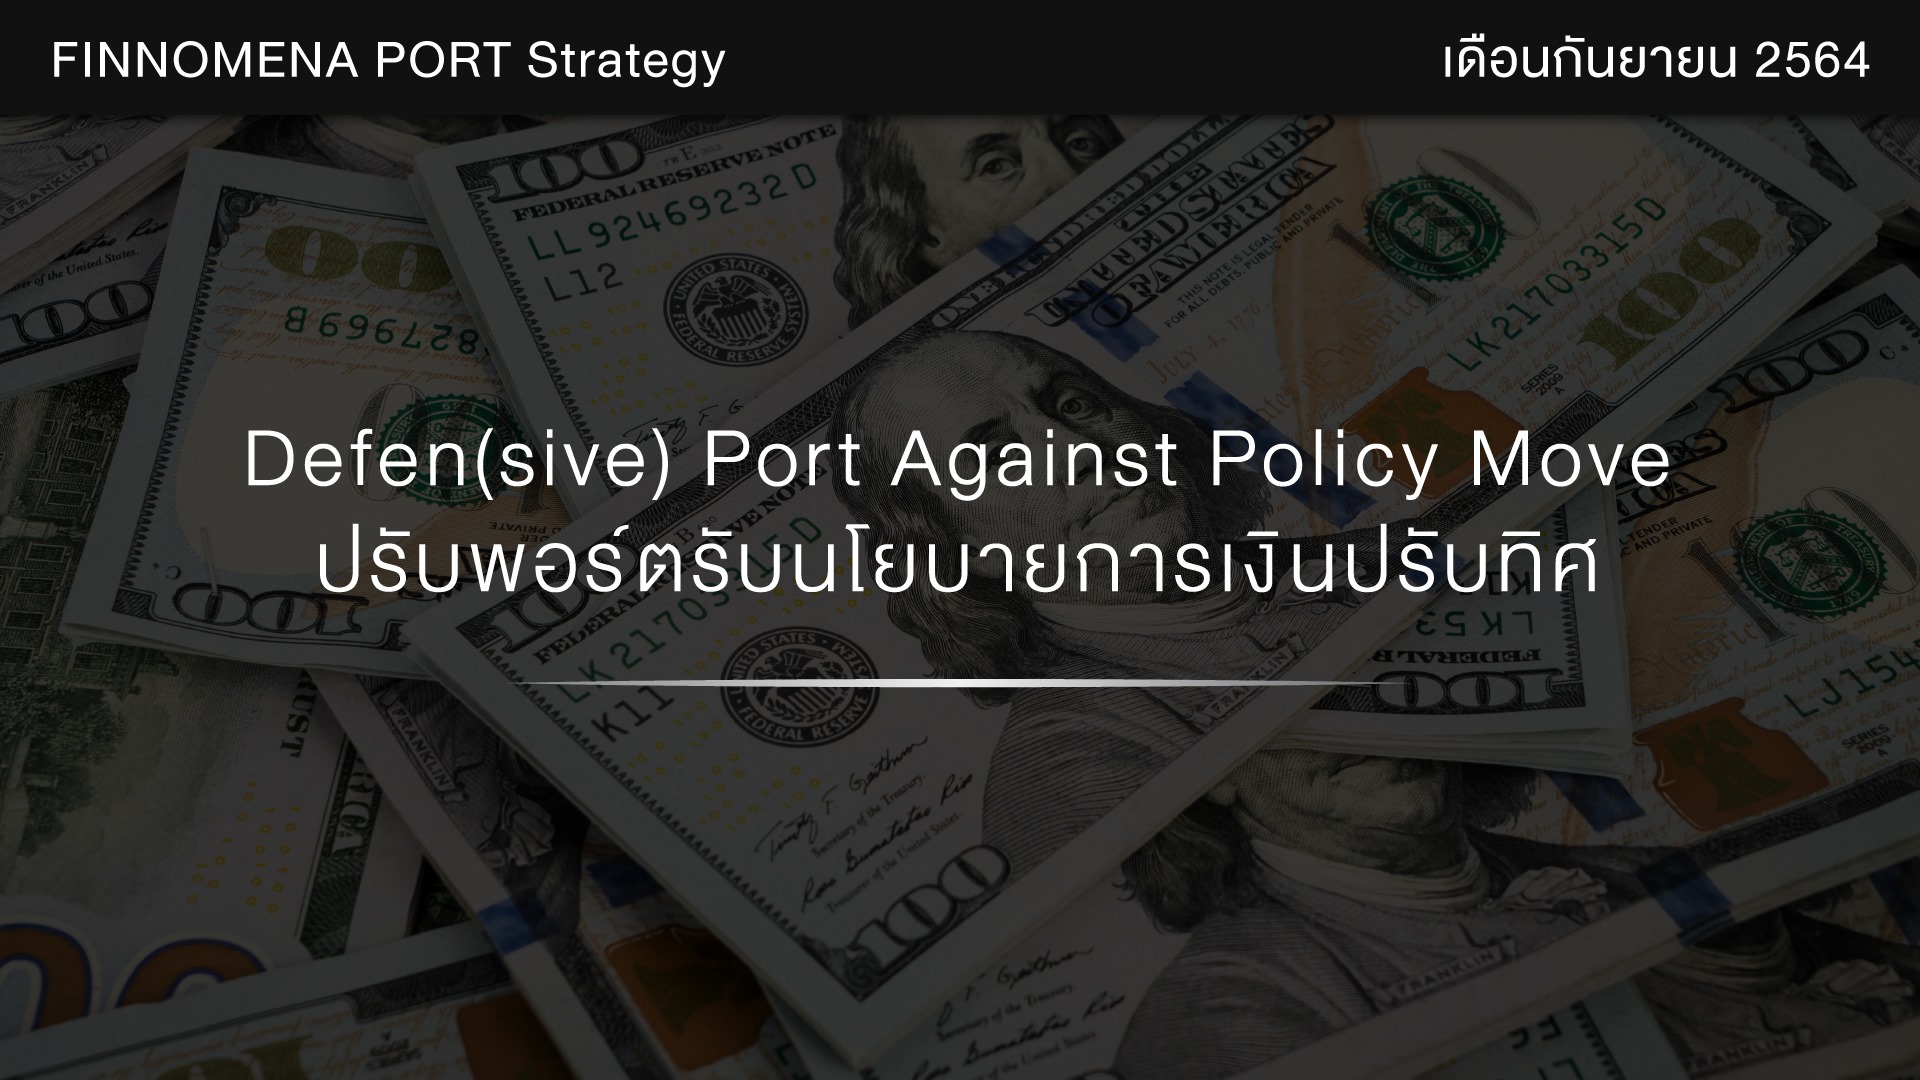 FINNOMENA PORT Strategy เดือนกันยายน 2021: Defen(sive) Port Against Policy Move ปรับพอร์ตรับนโยบายการเงินปรับทิศ